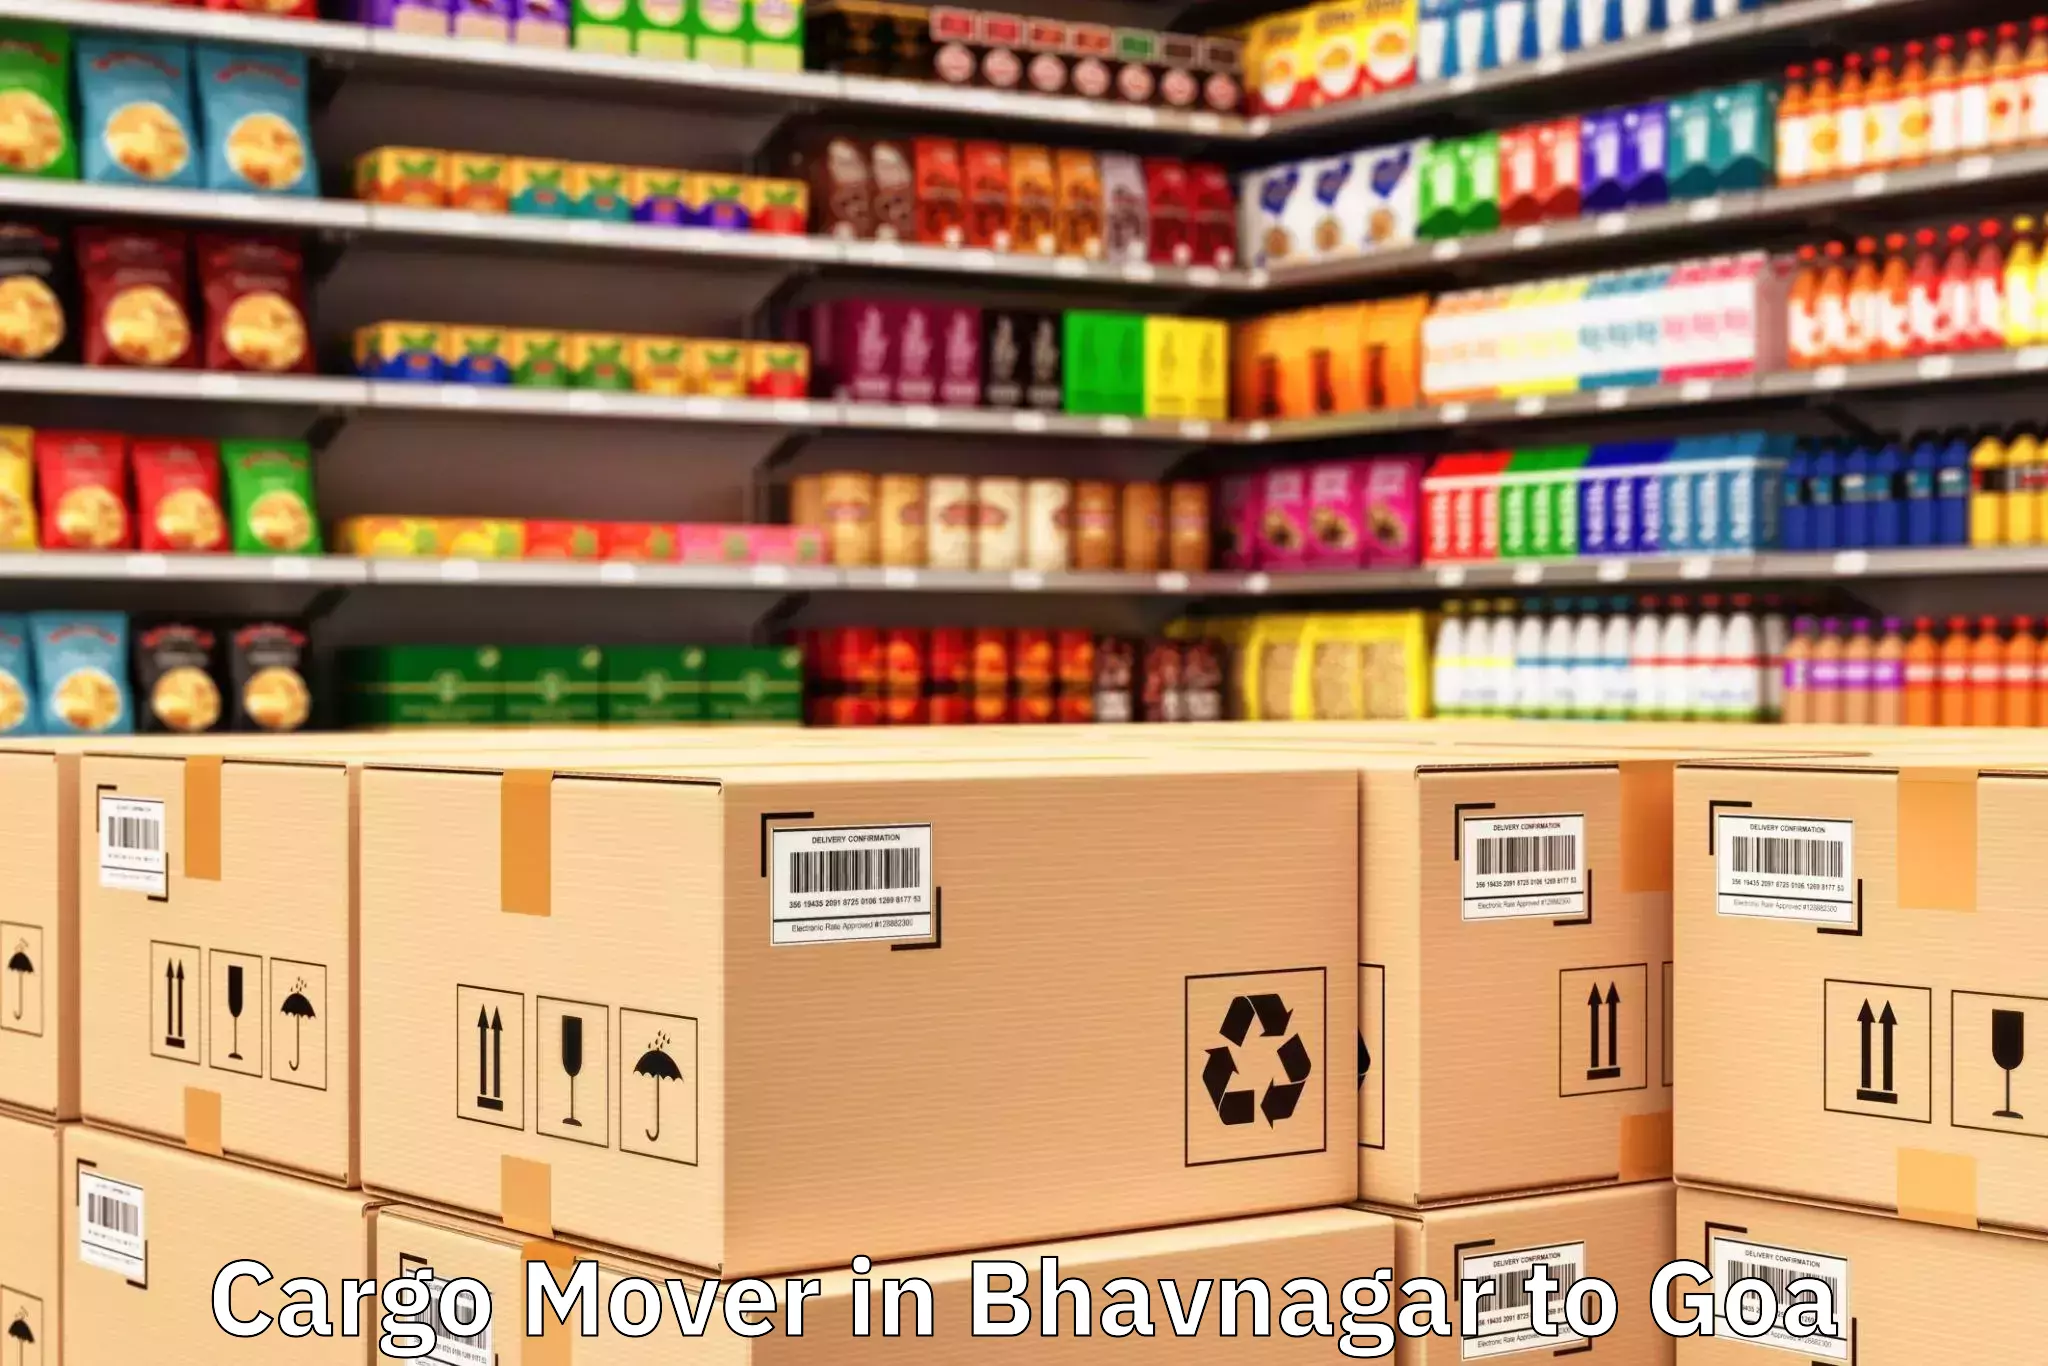 Hassle-Free Bhavnagar to Goa Cargo Mover